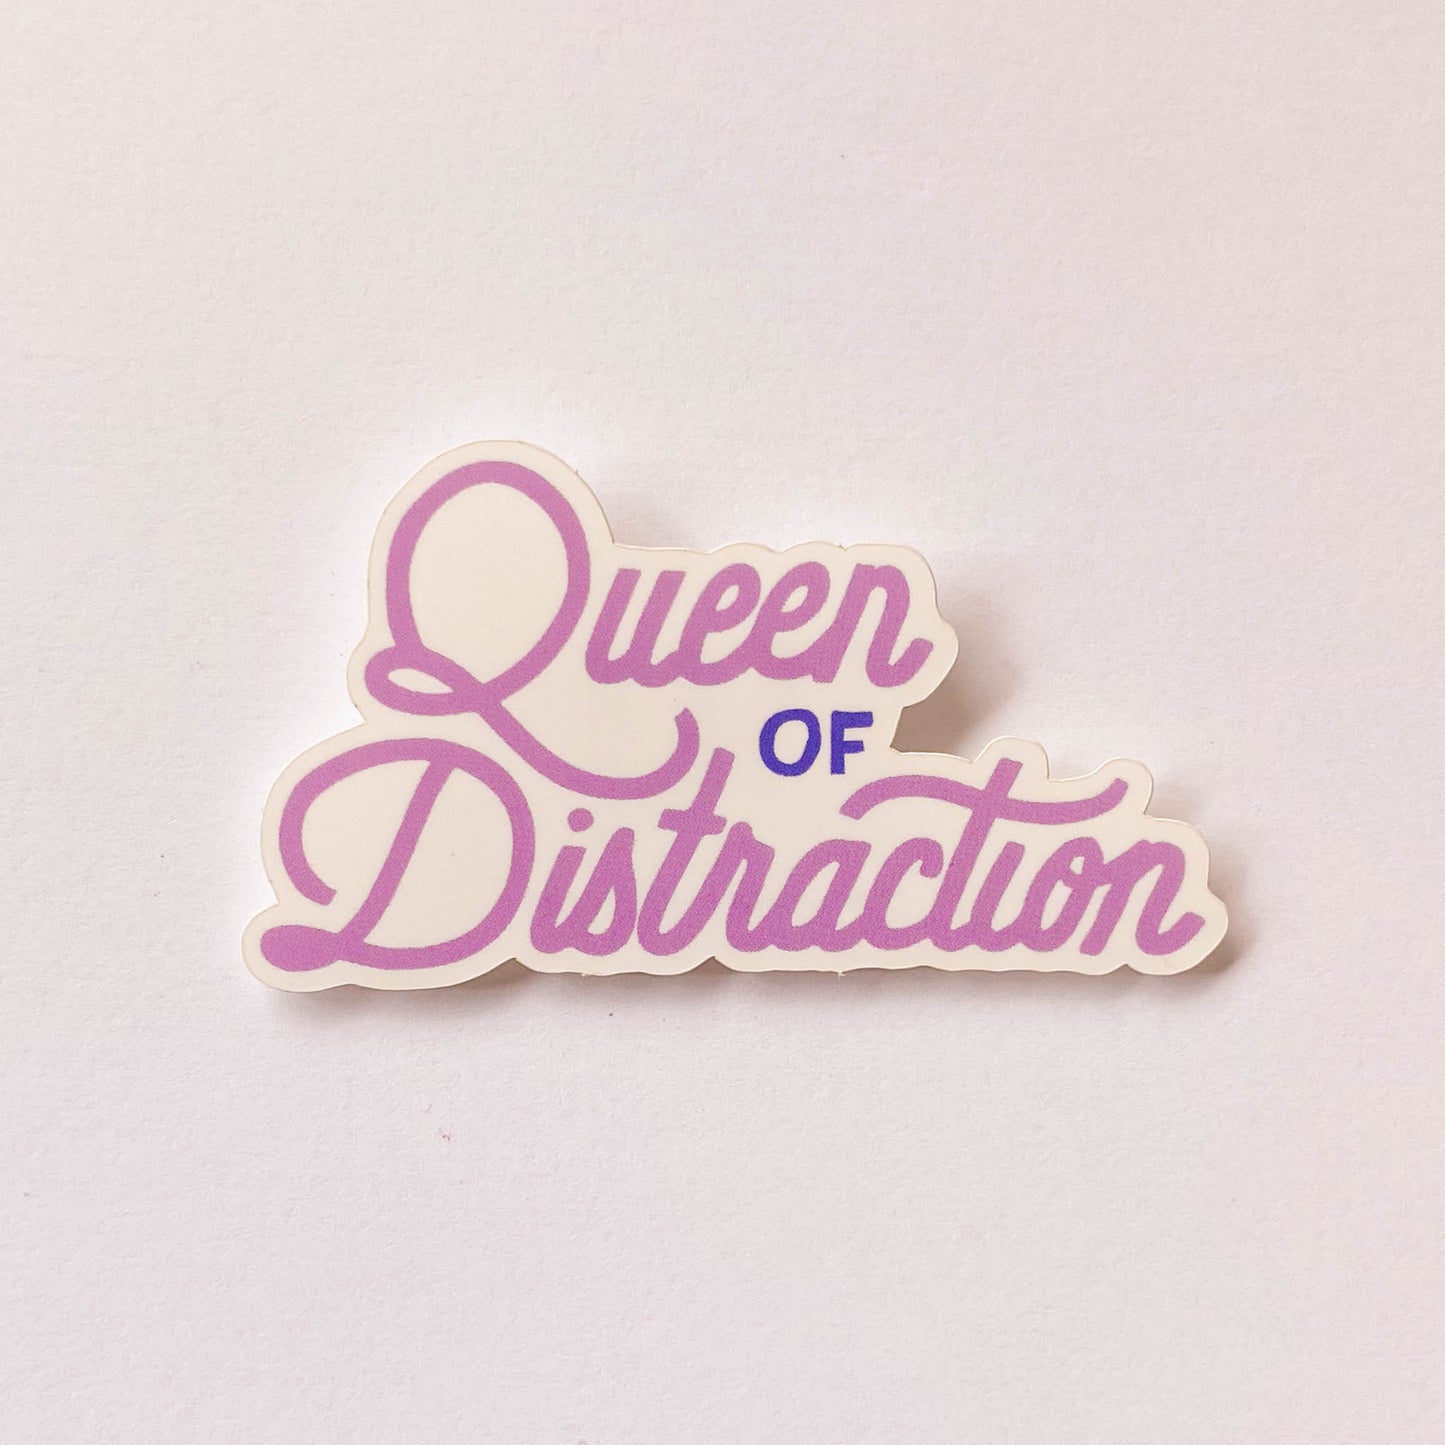 Queen of Distraction Sticker, 2x1 in.